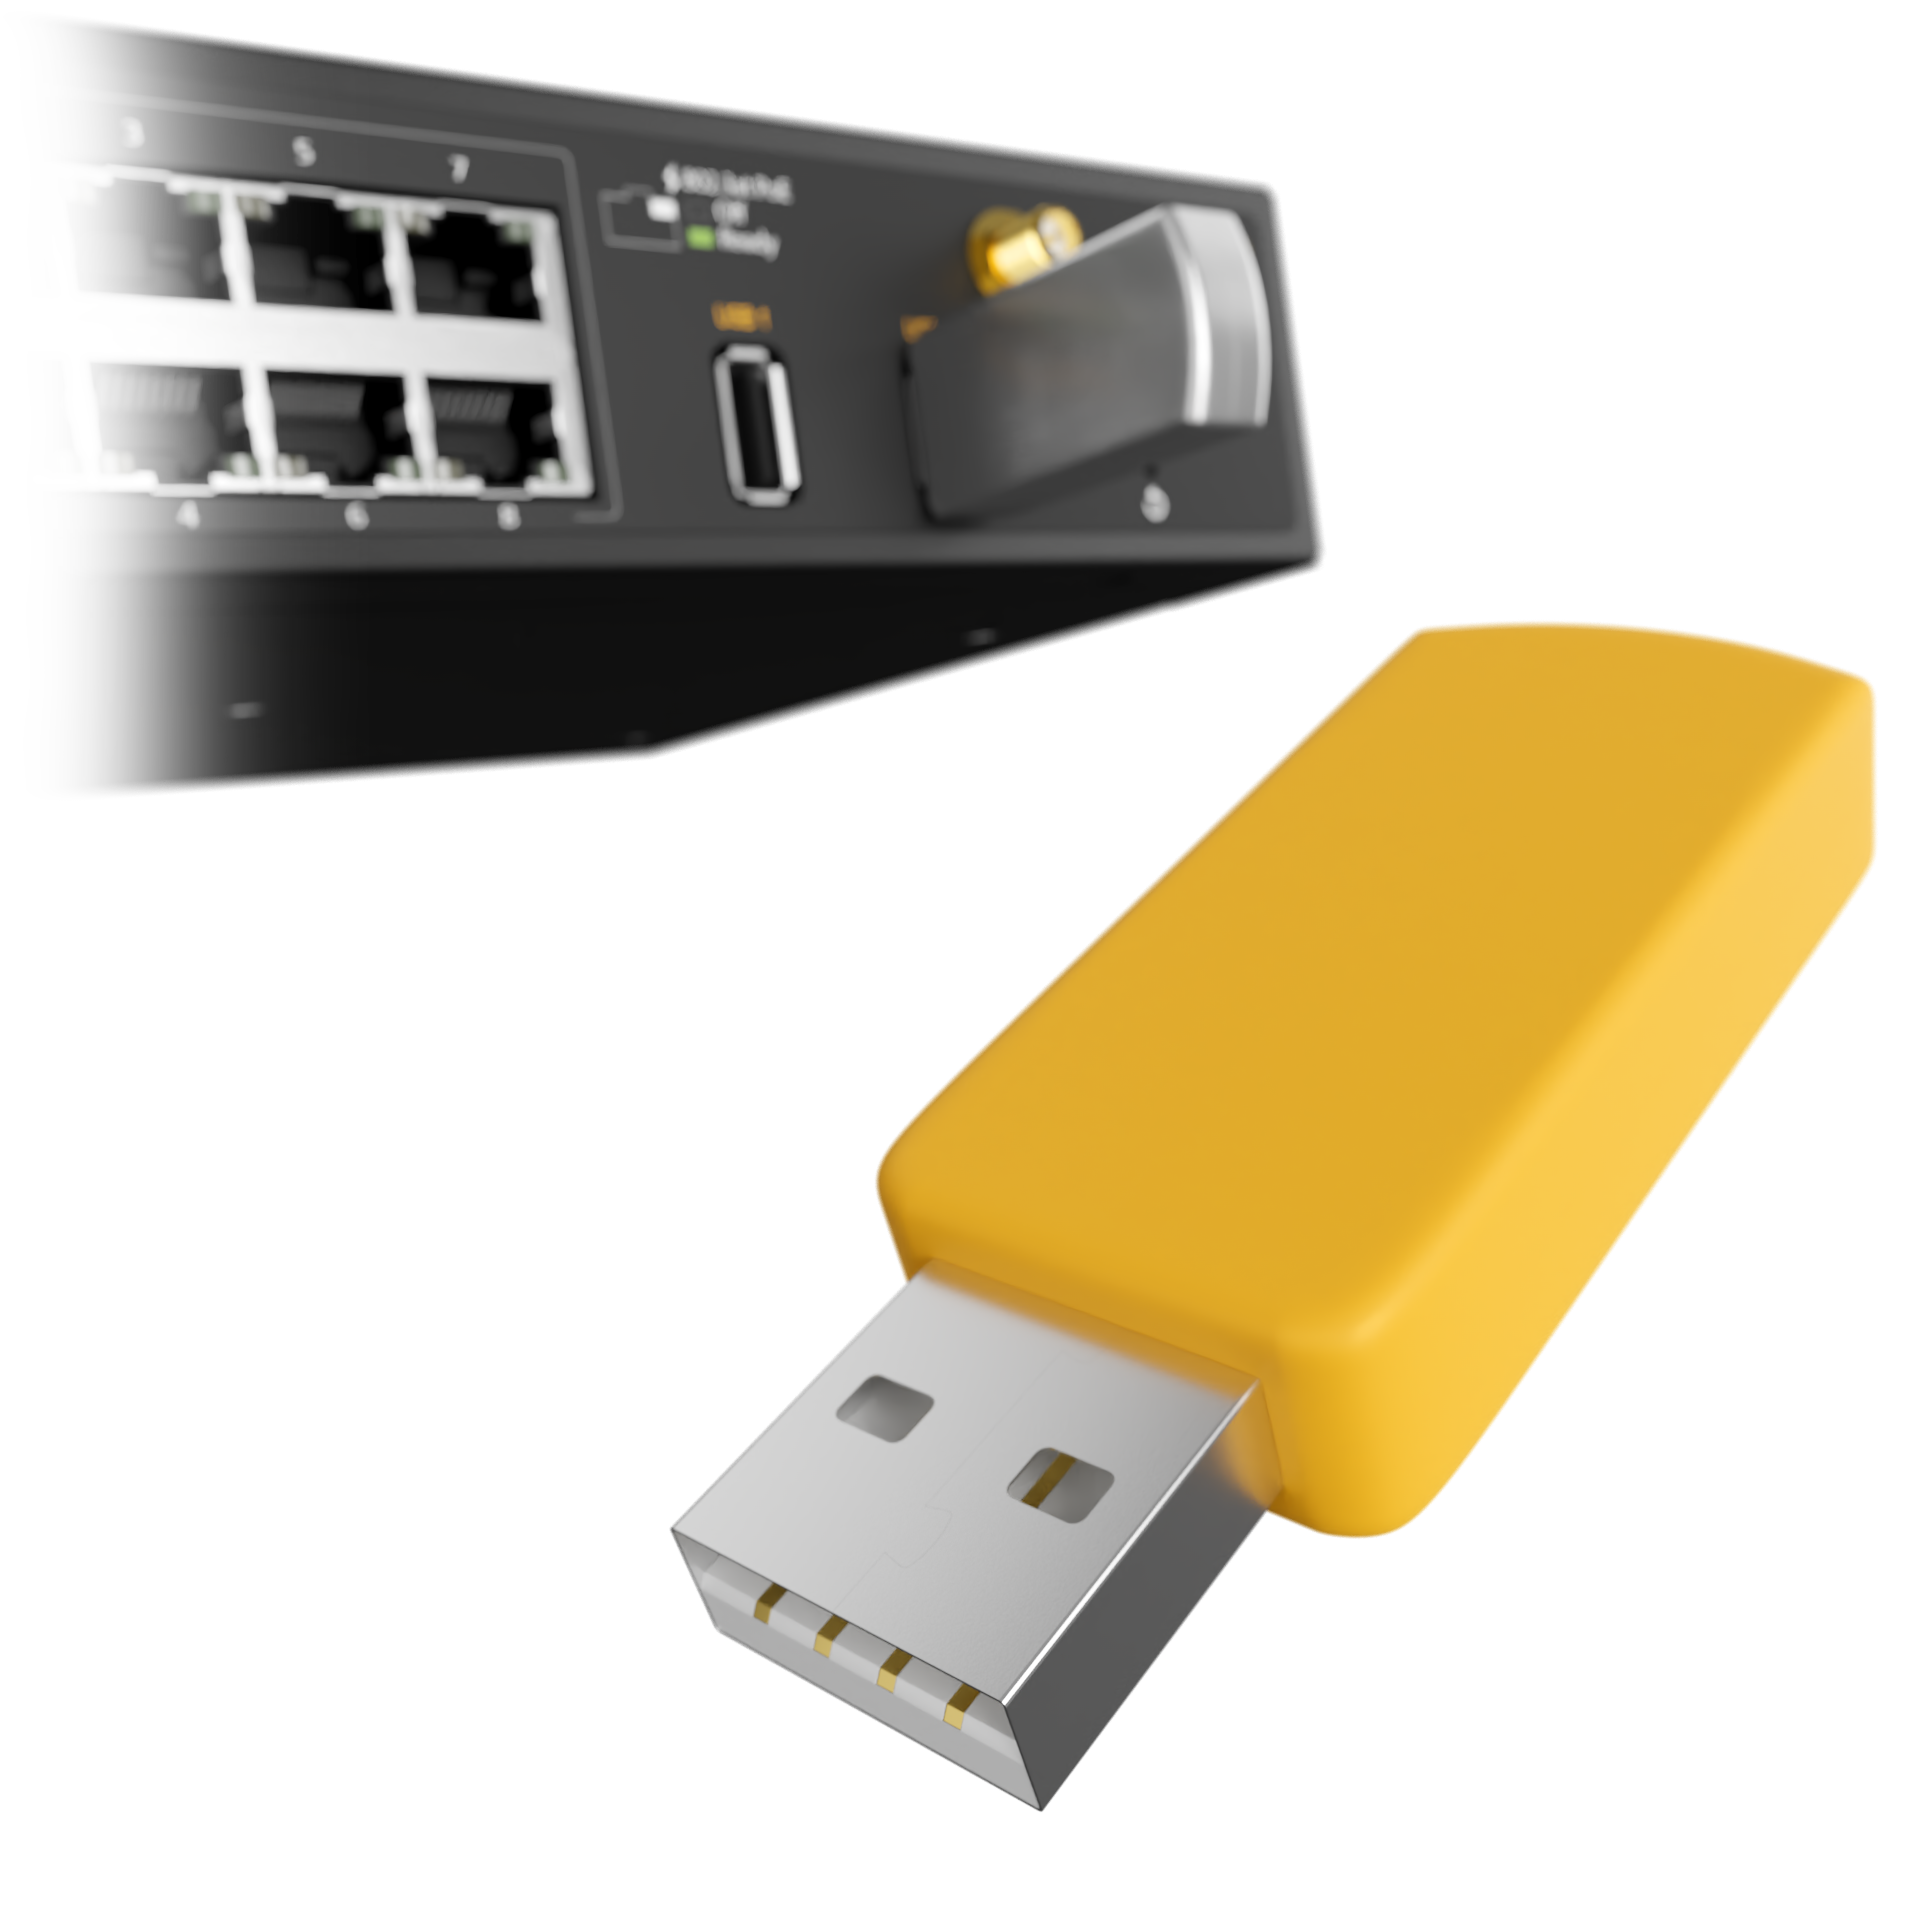 USB supprt for edge computing